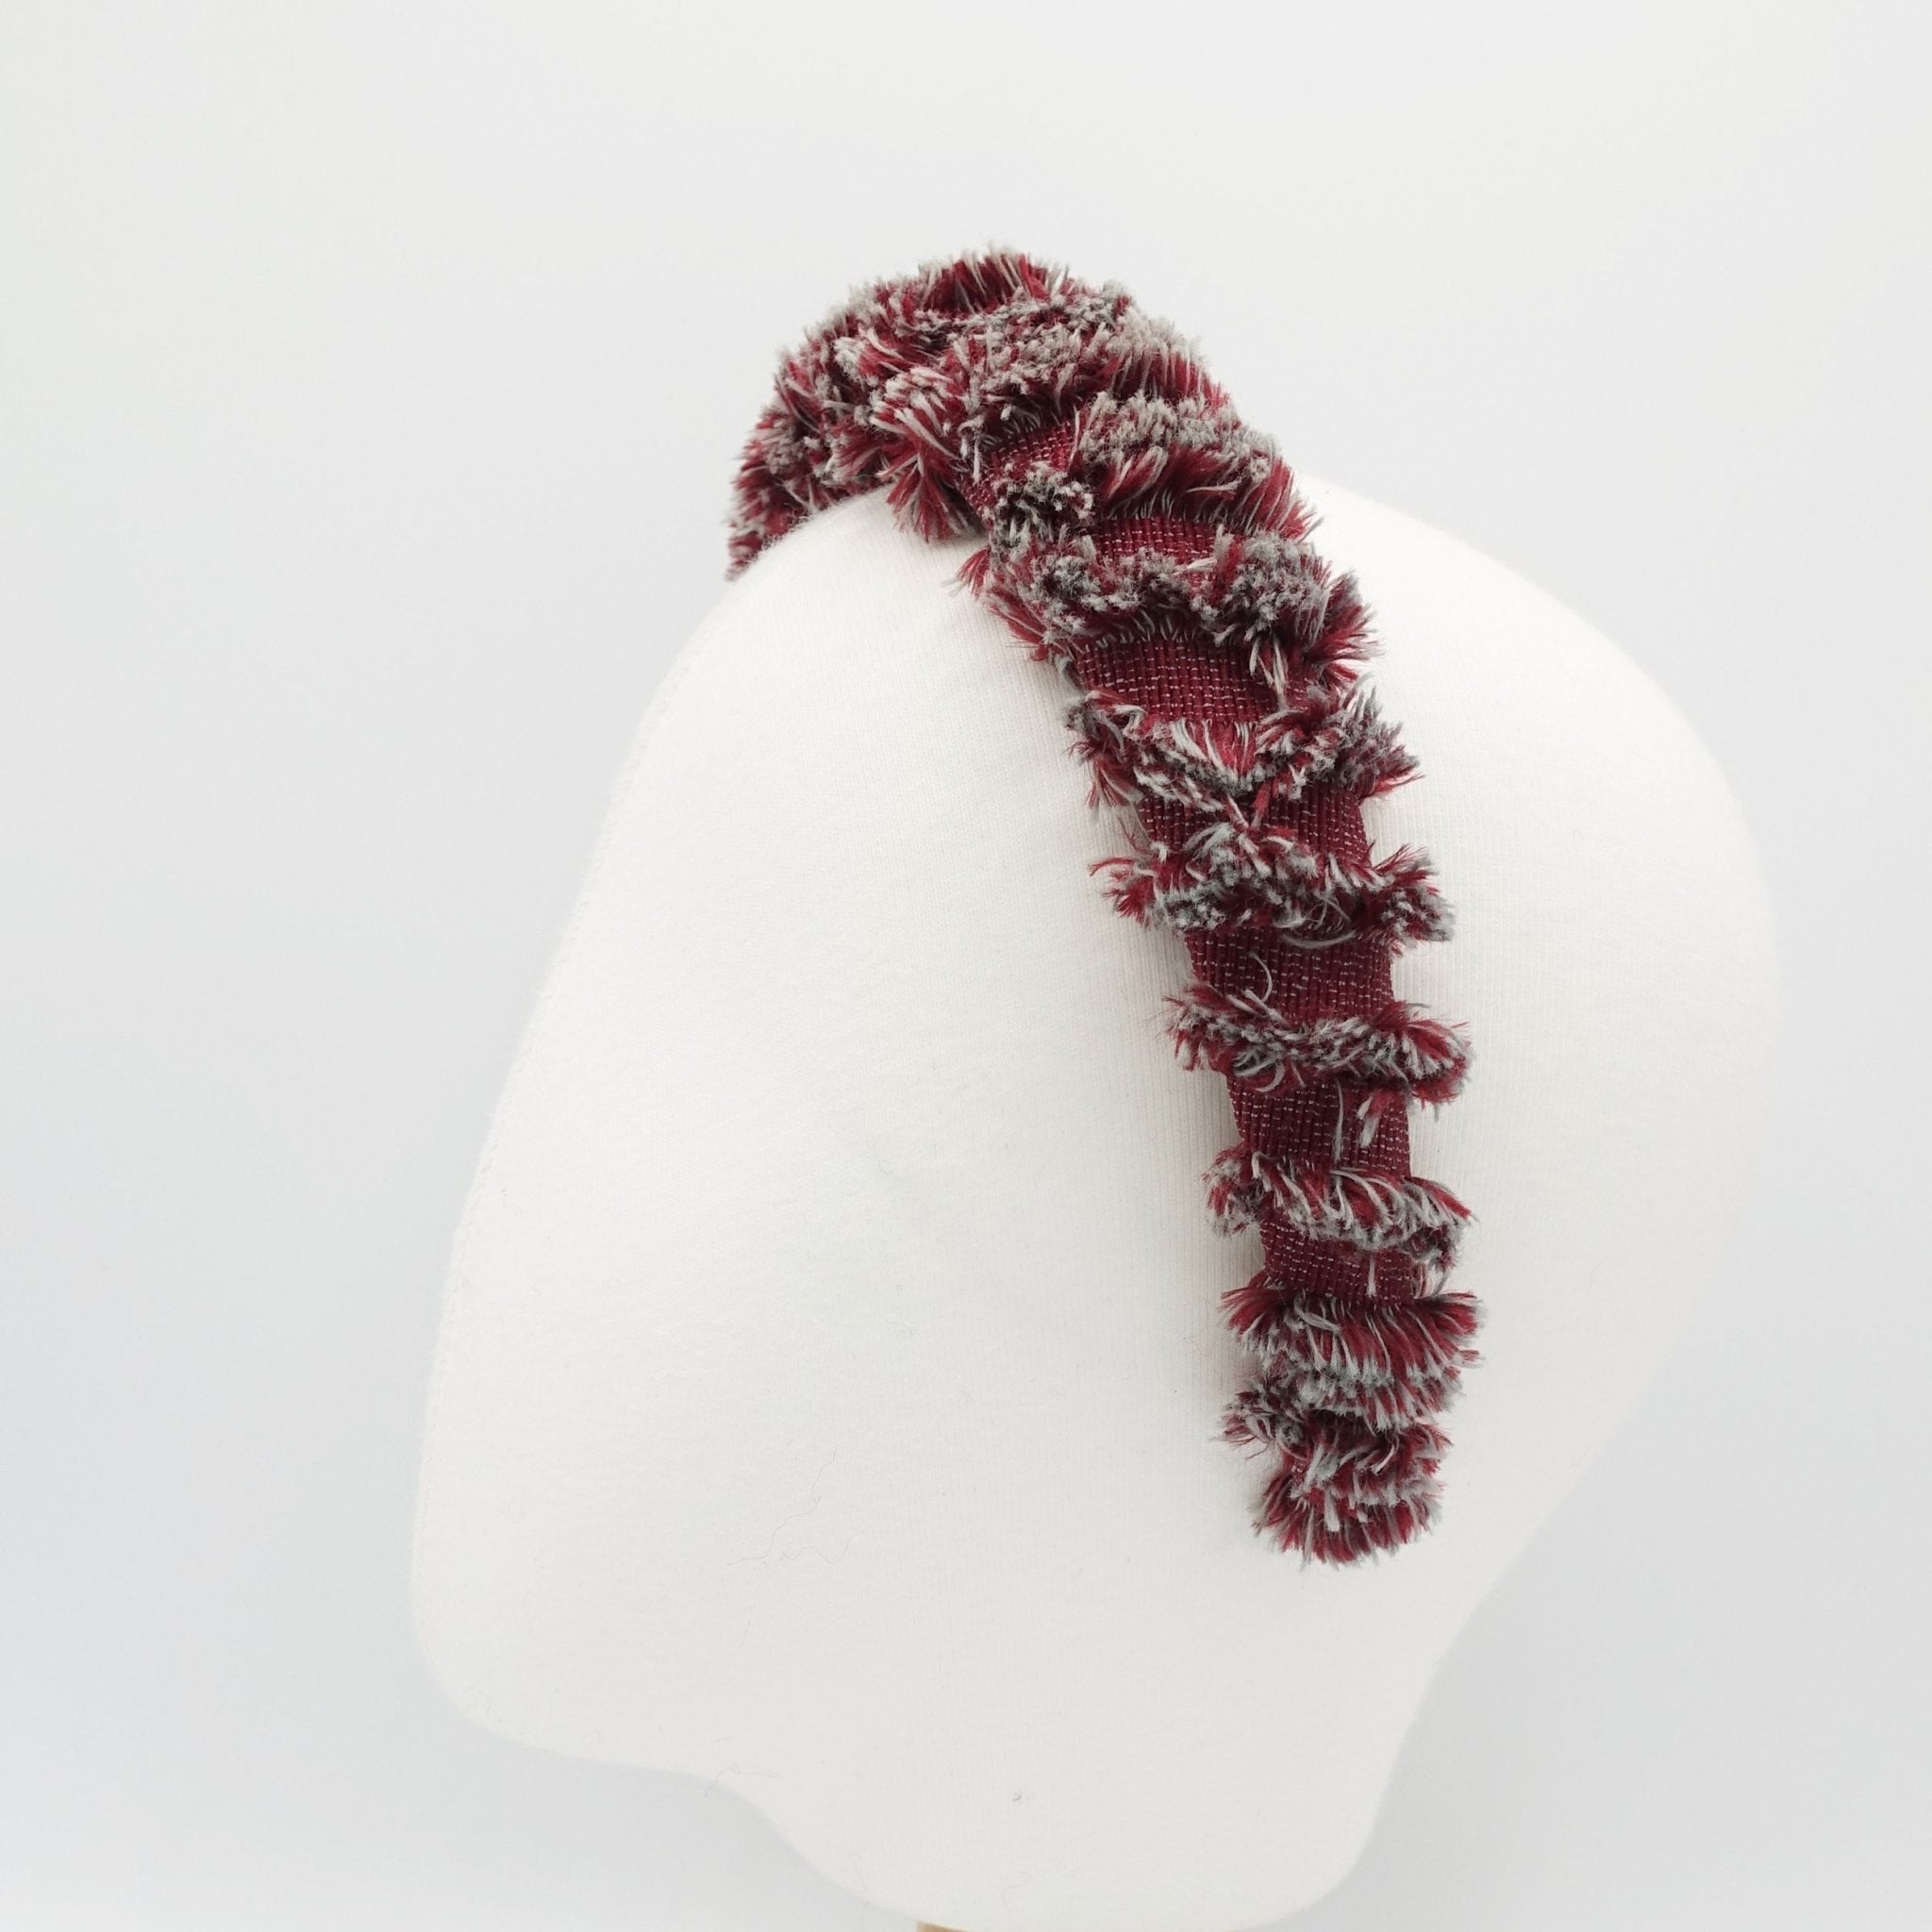 VeryShine denim frayed edge padded wrap headband stylish hair accessory for women